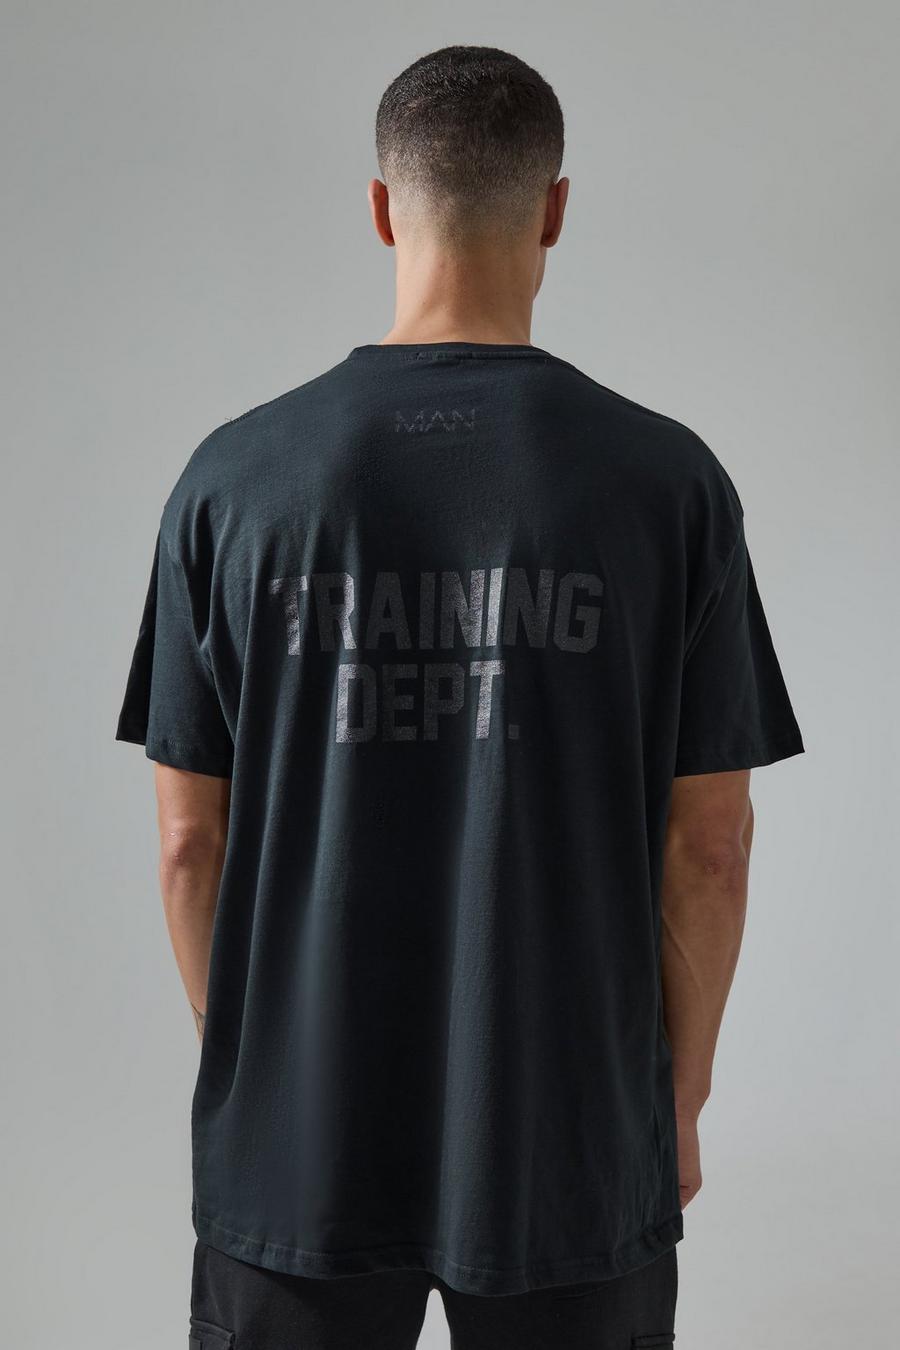 T-shirt oversize Active Training Dept, Black